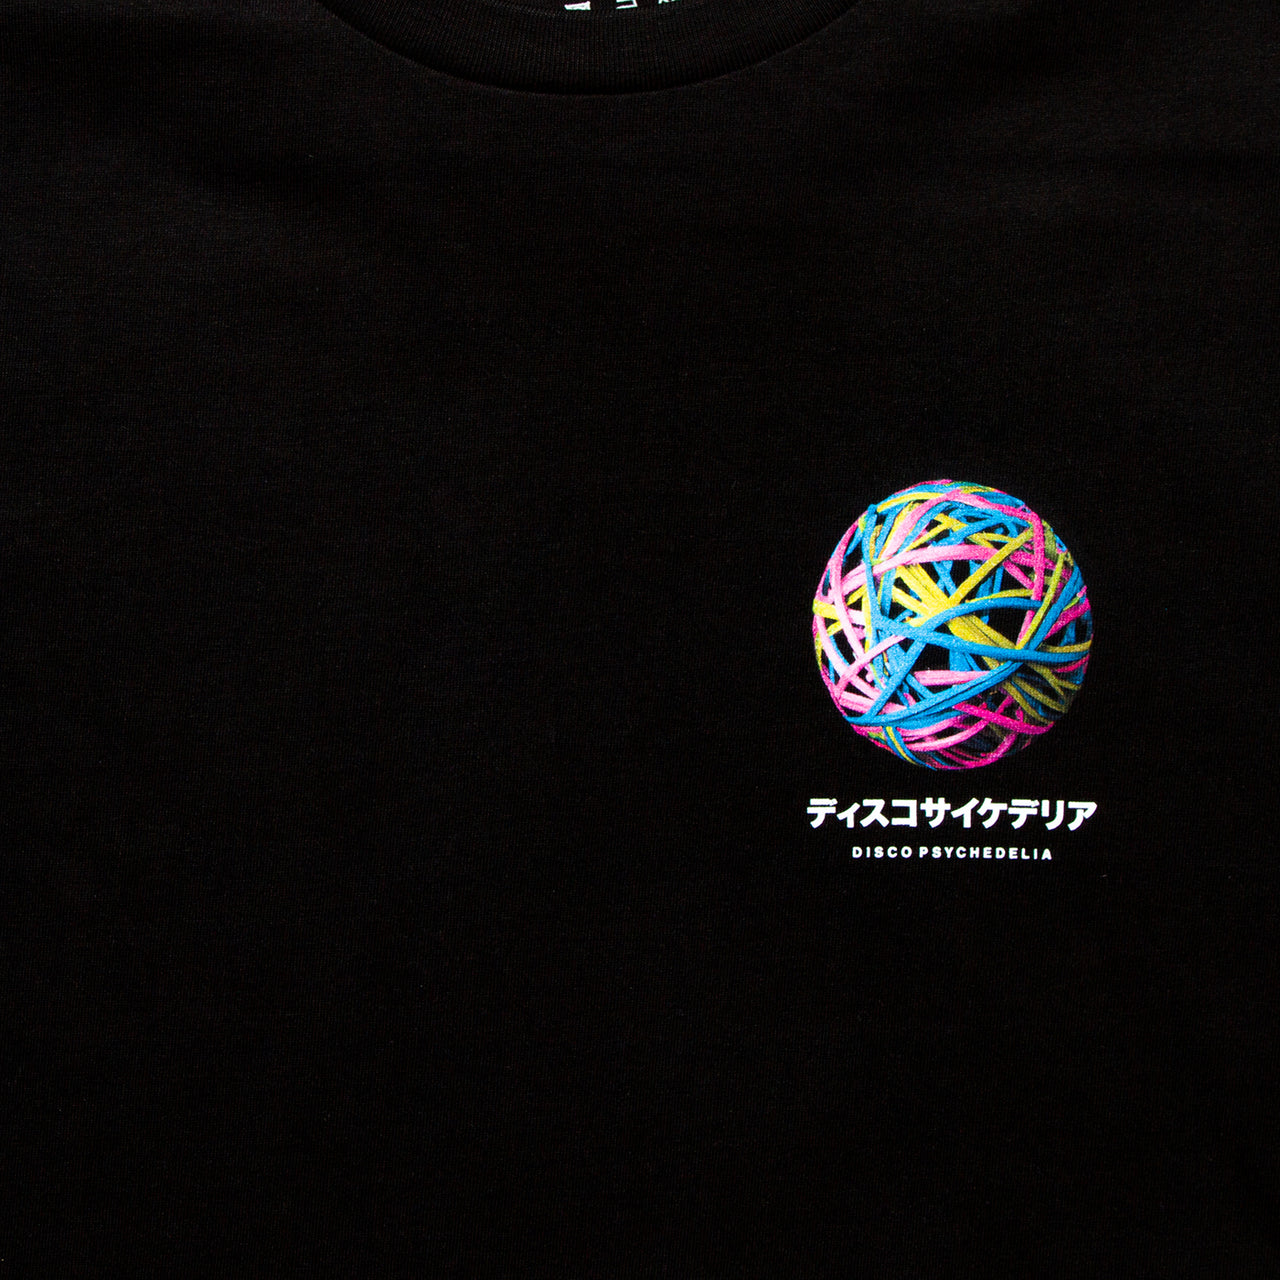 Crest Orb 010 - Tshirt - Black